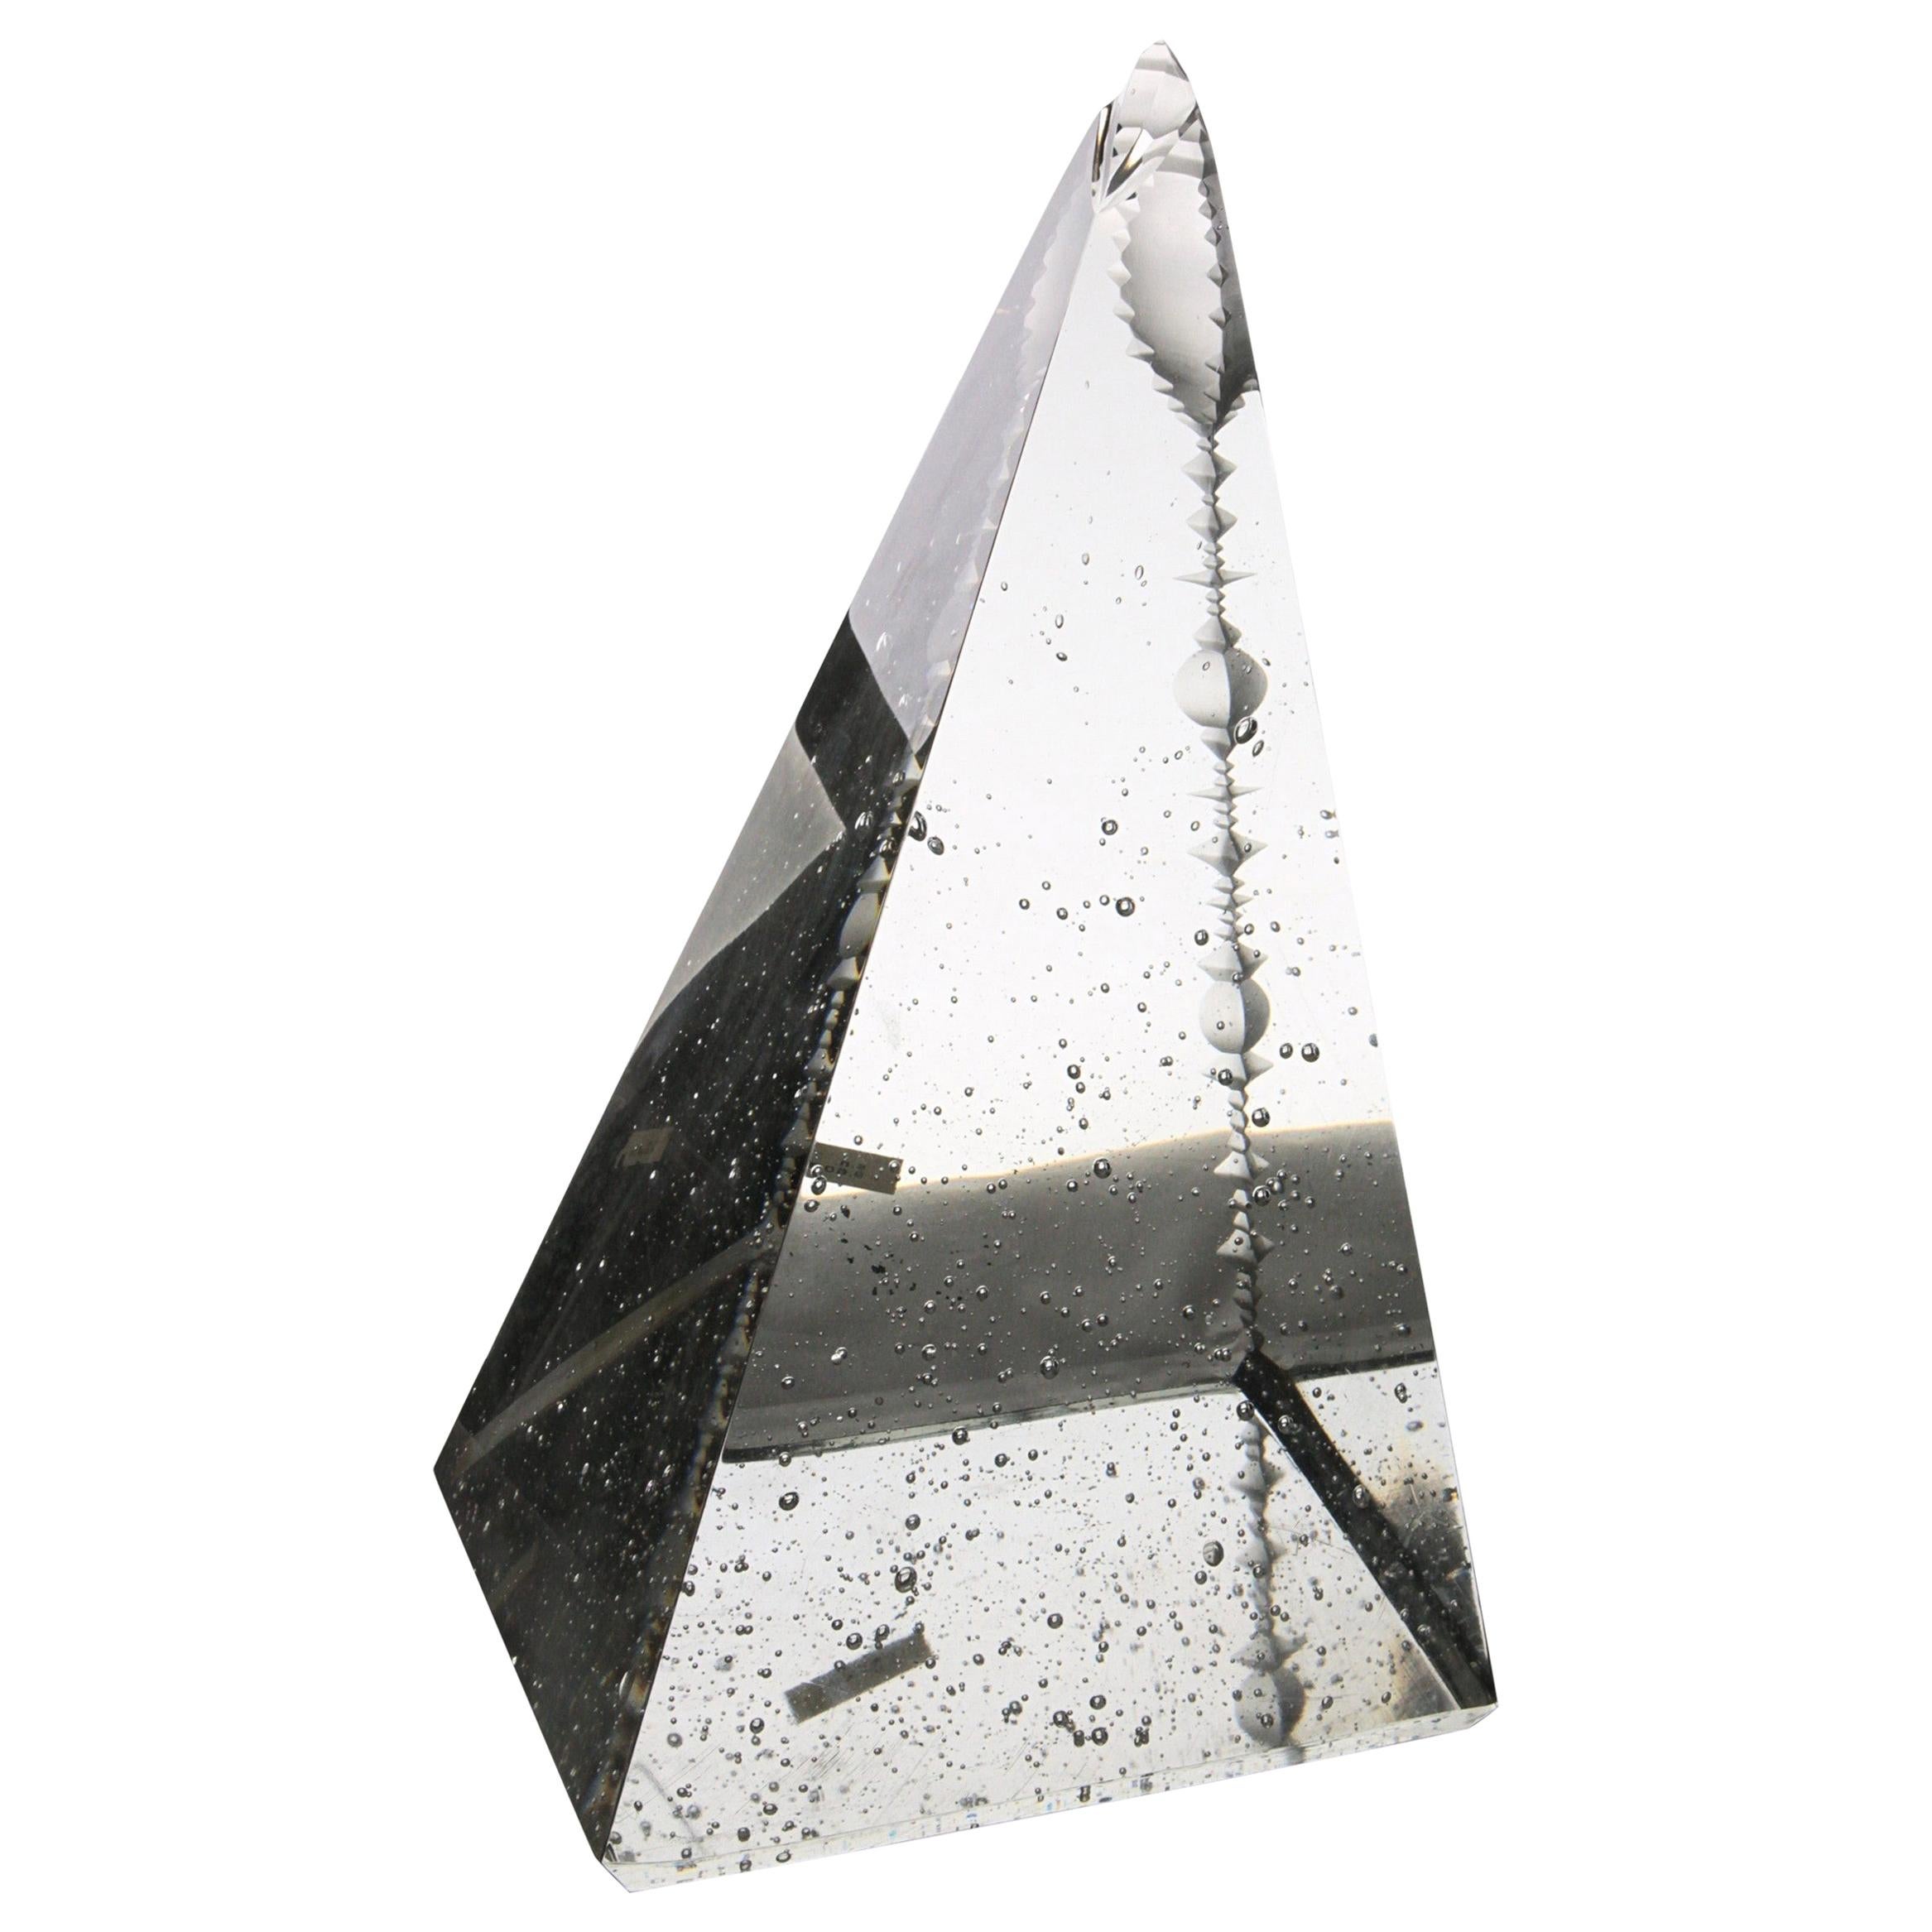 Jan Exnar, Czech Crystal Pyramid Monolith with Corner Engraving, 1998